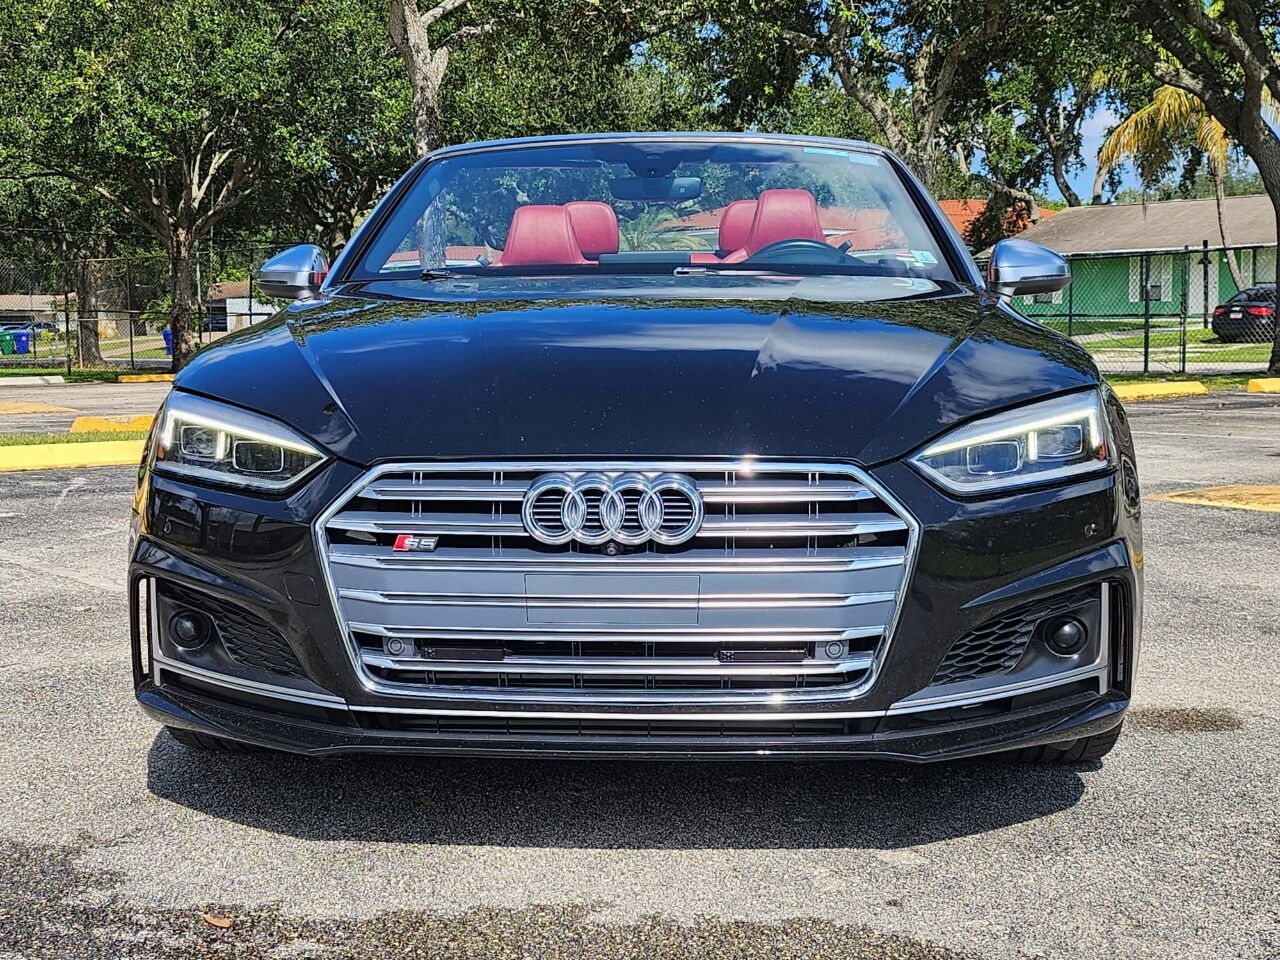 2018 Audi S5 Convertible - $28,995